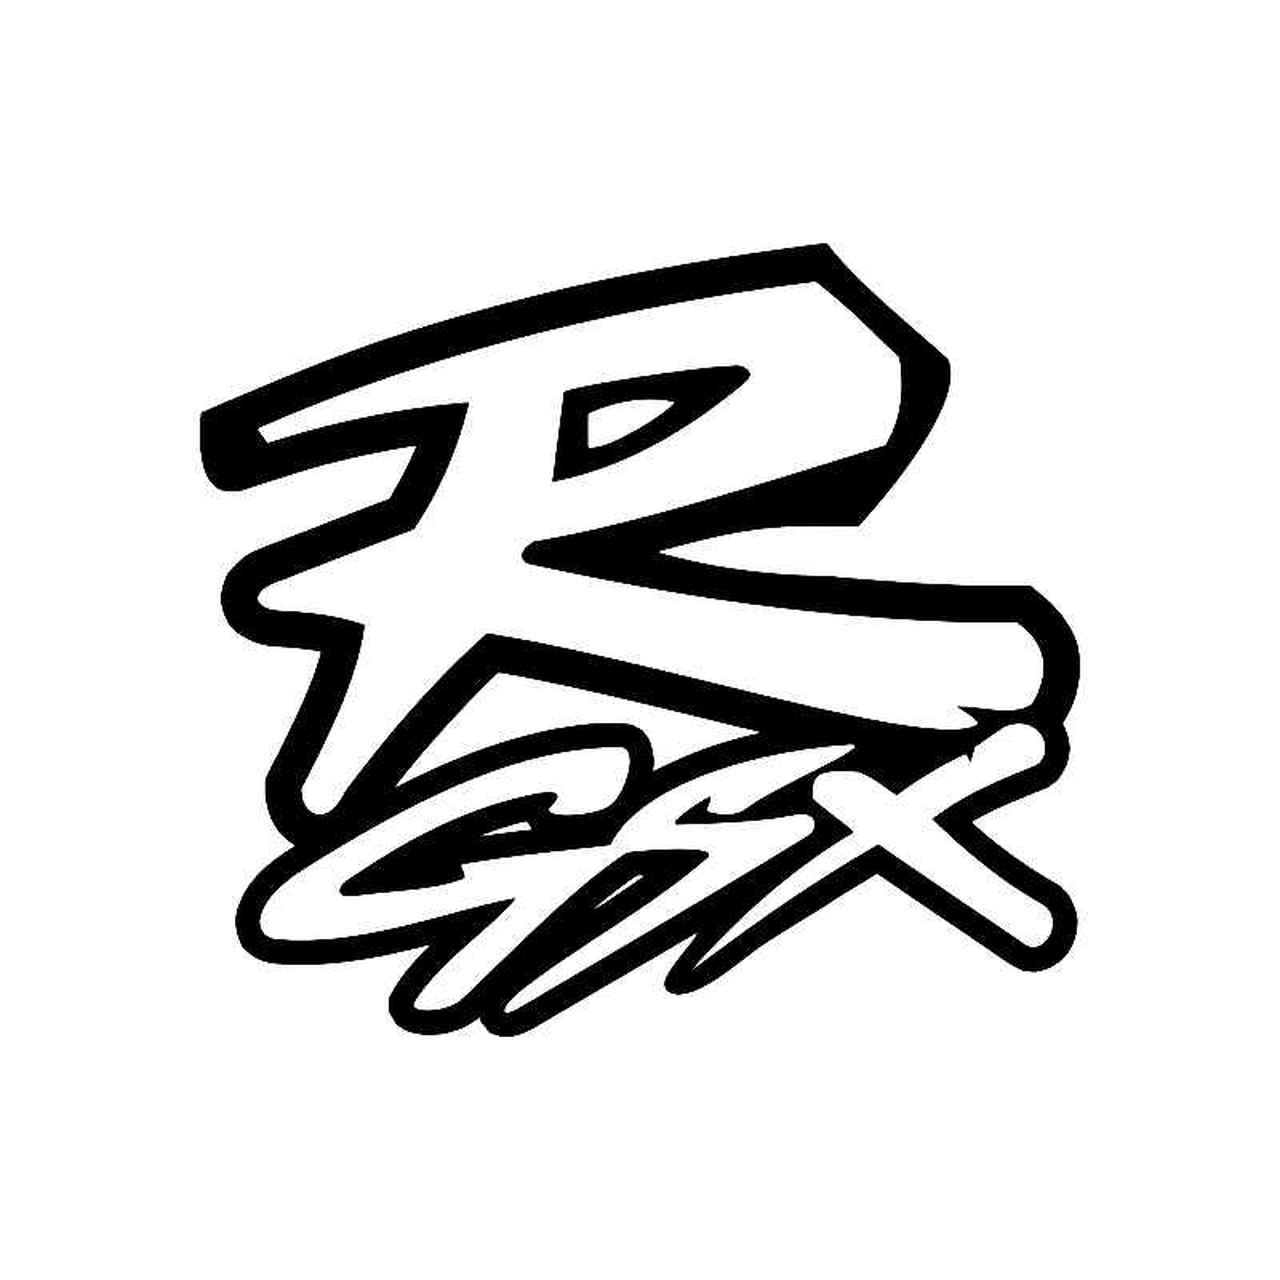 GSX Logo - Gsx R Logo Jdm Decal